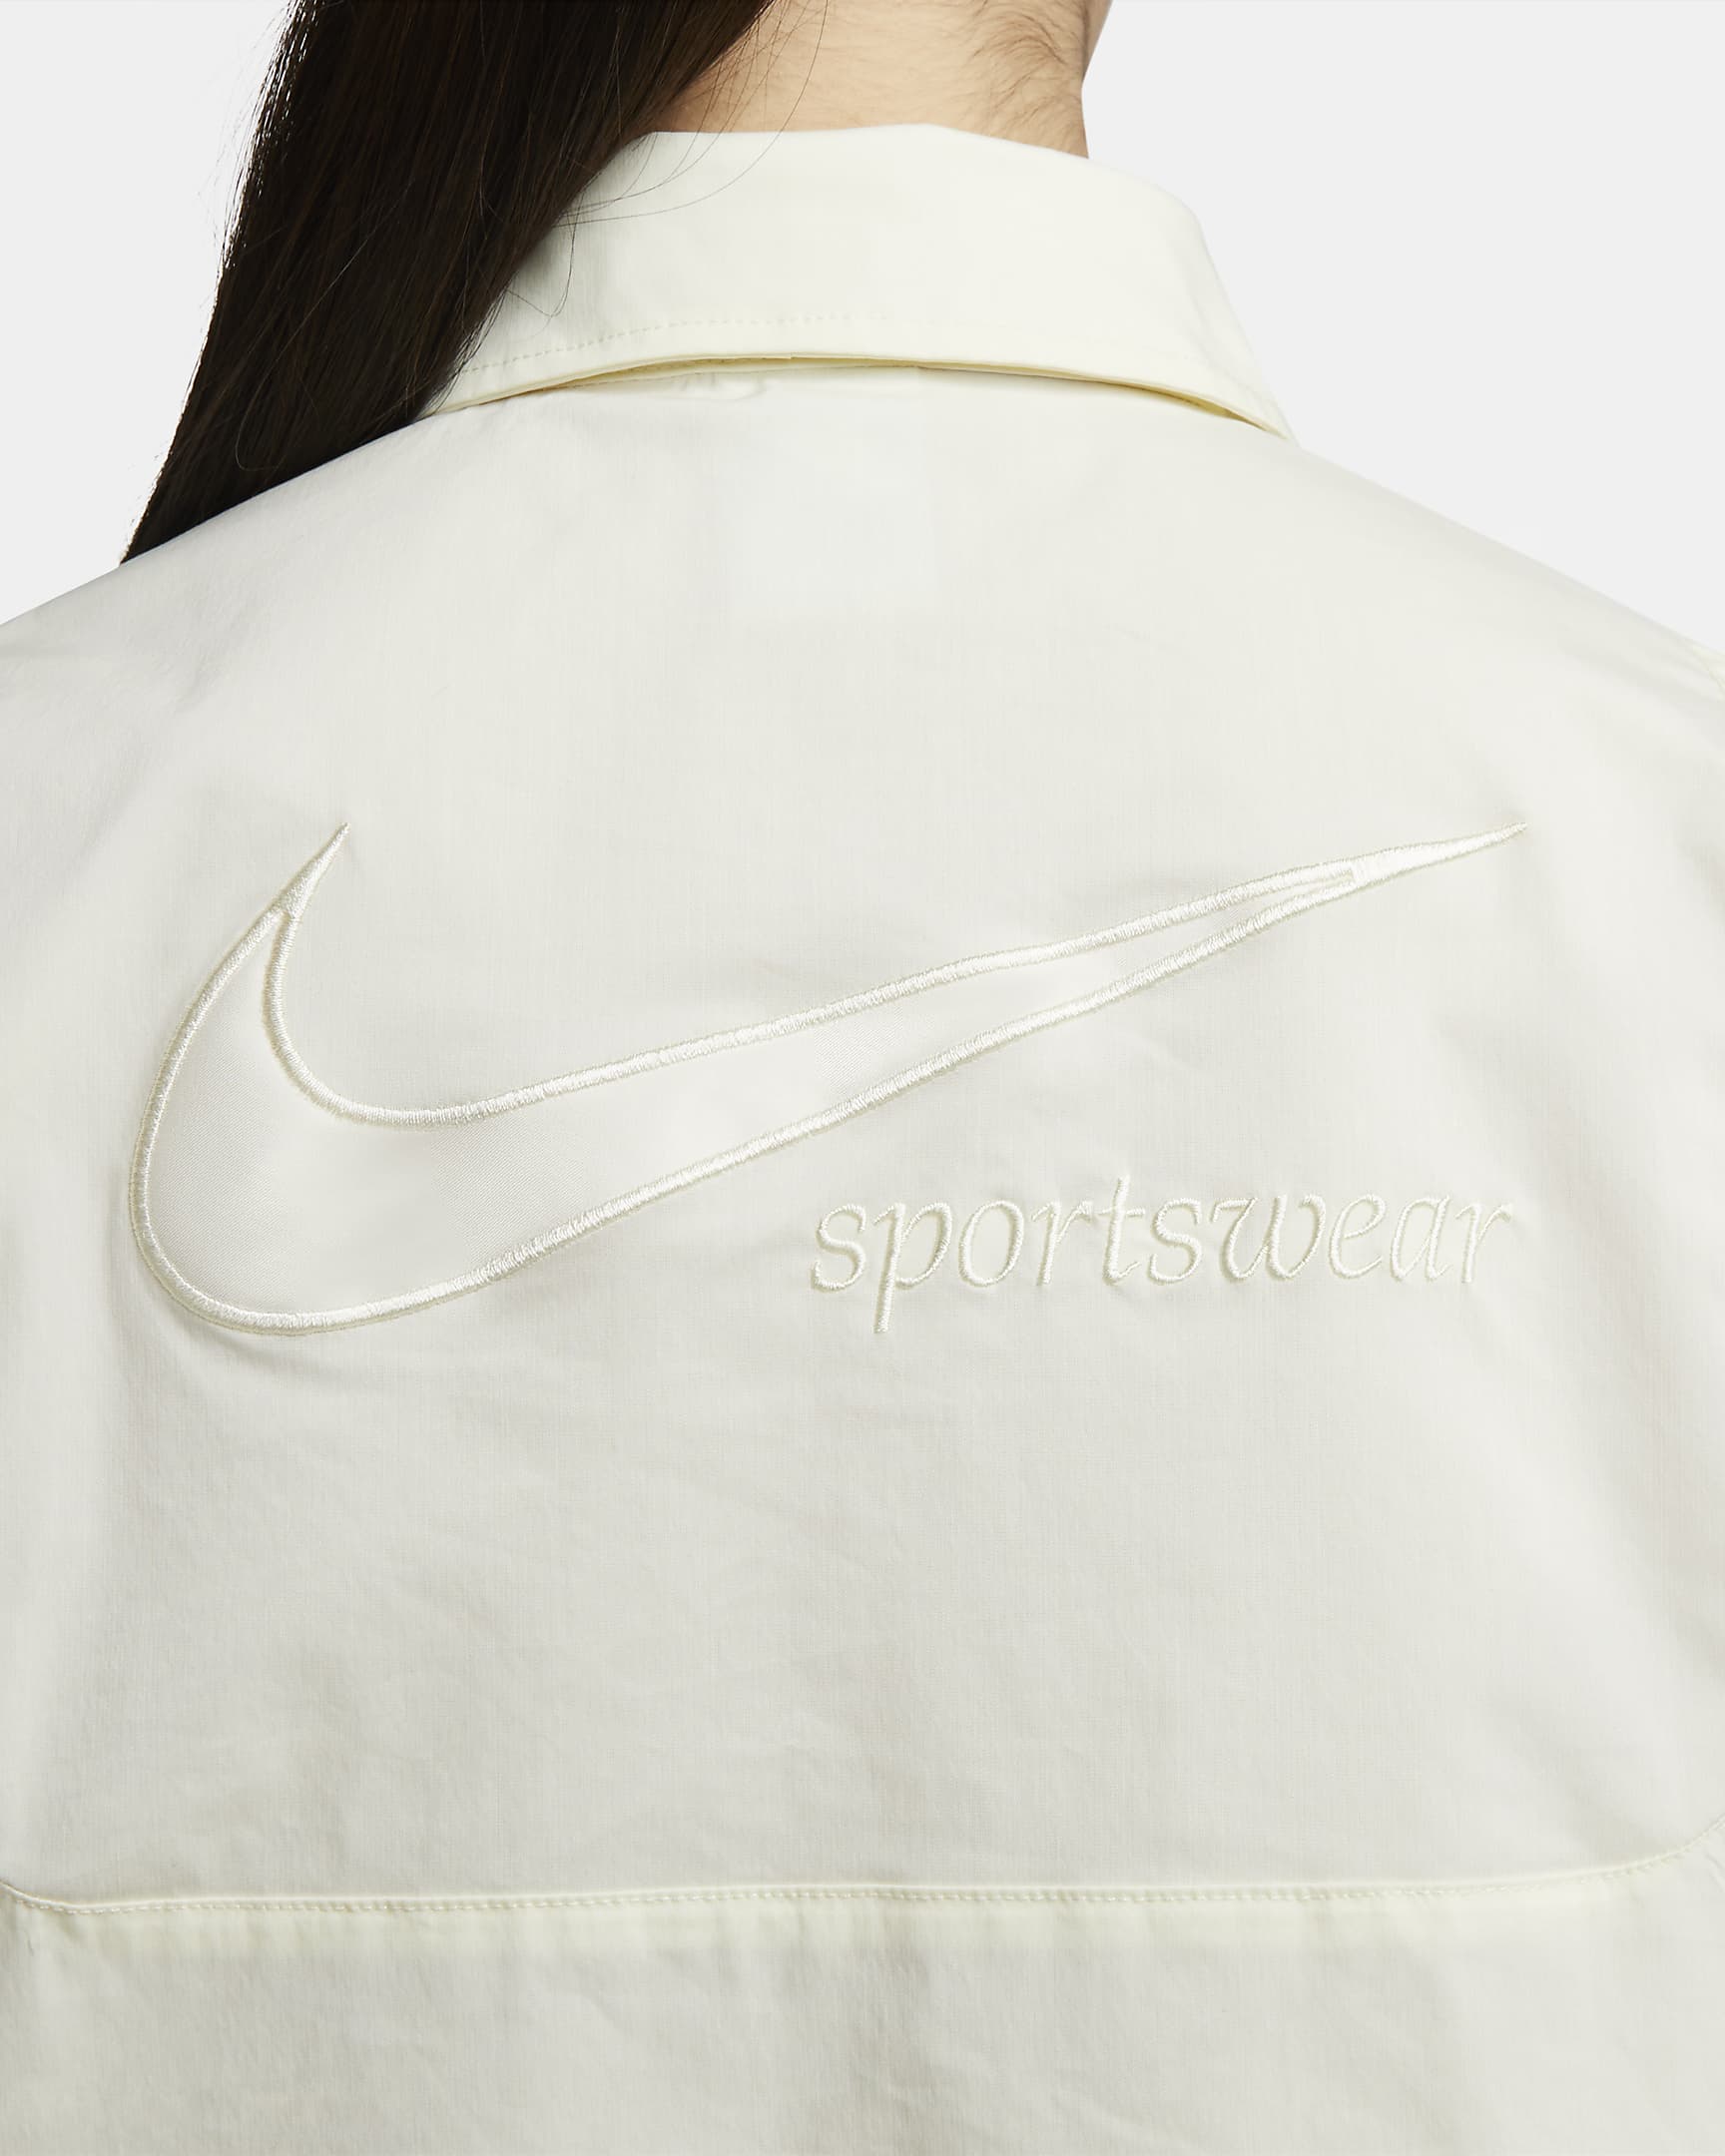 Nike Sportswear Collection Women's Collared Short-Sleeve Top. Nike ID